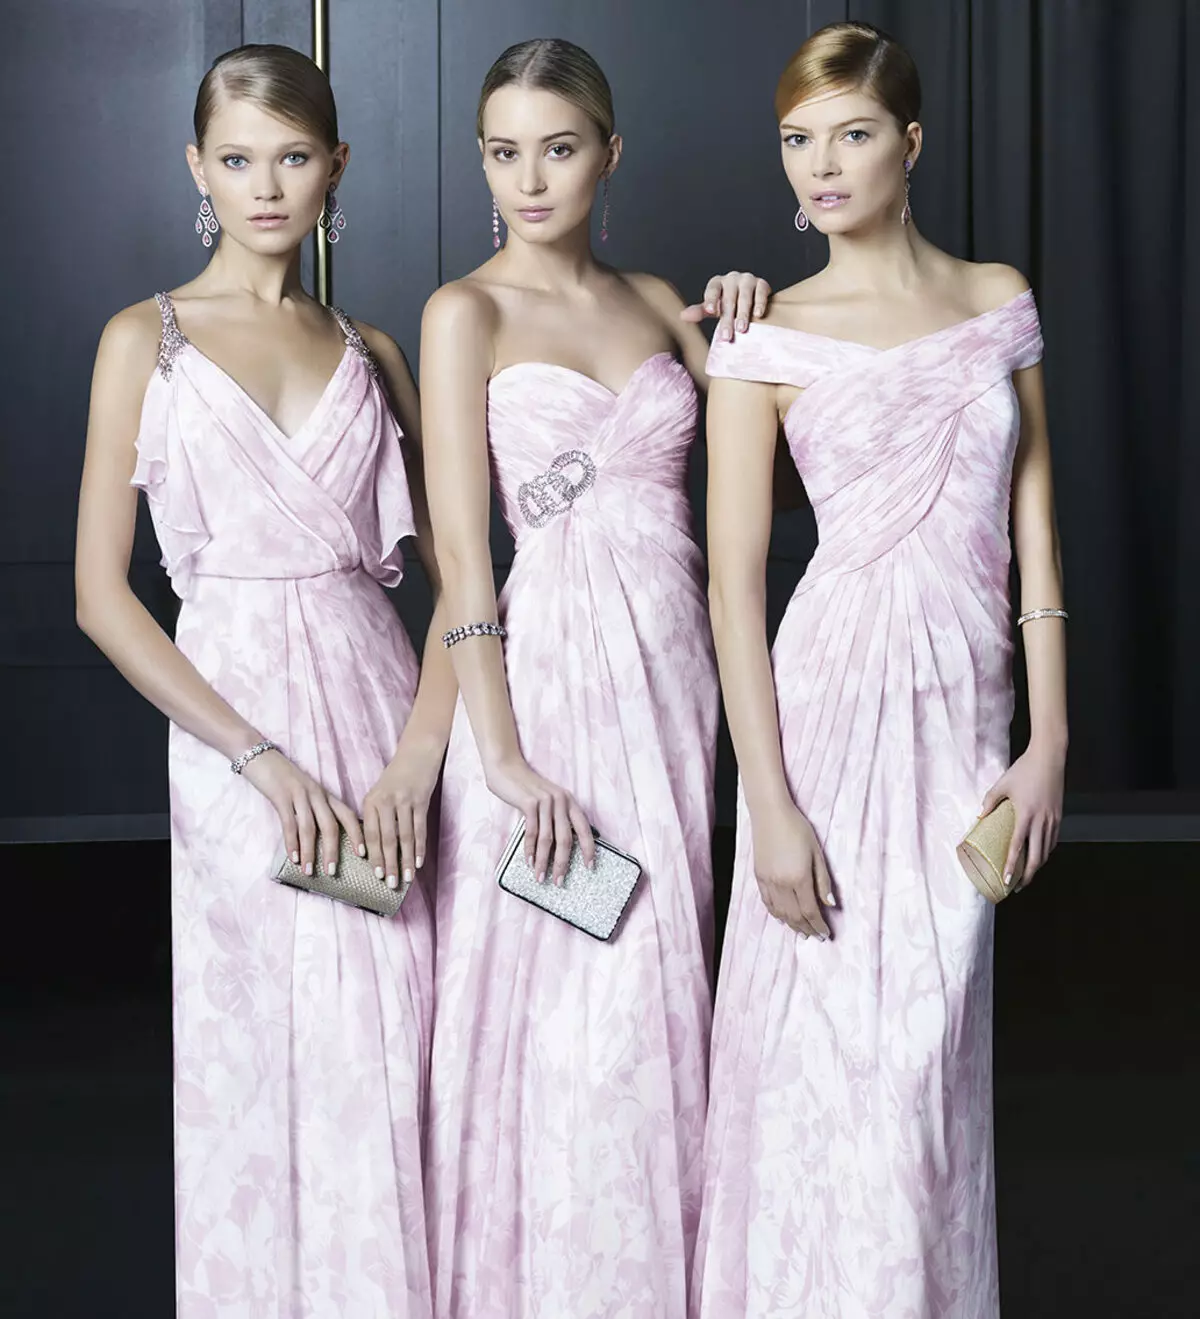 Zachte roze jurken voor bruidmeisjes